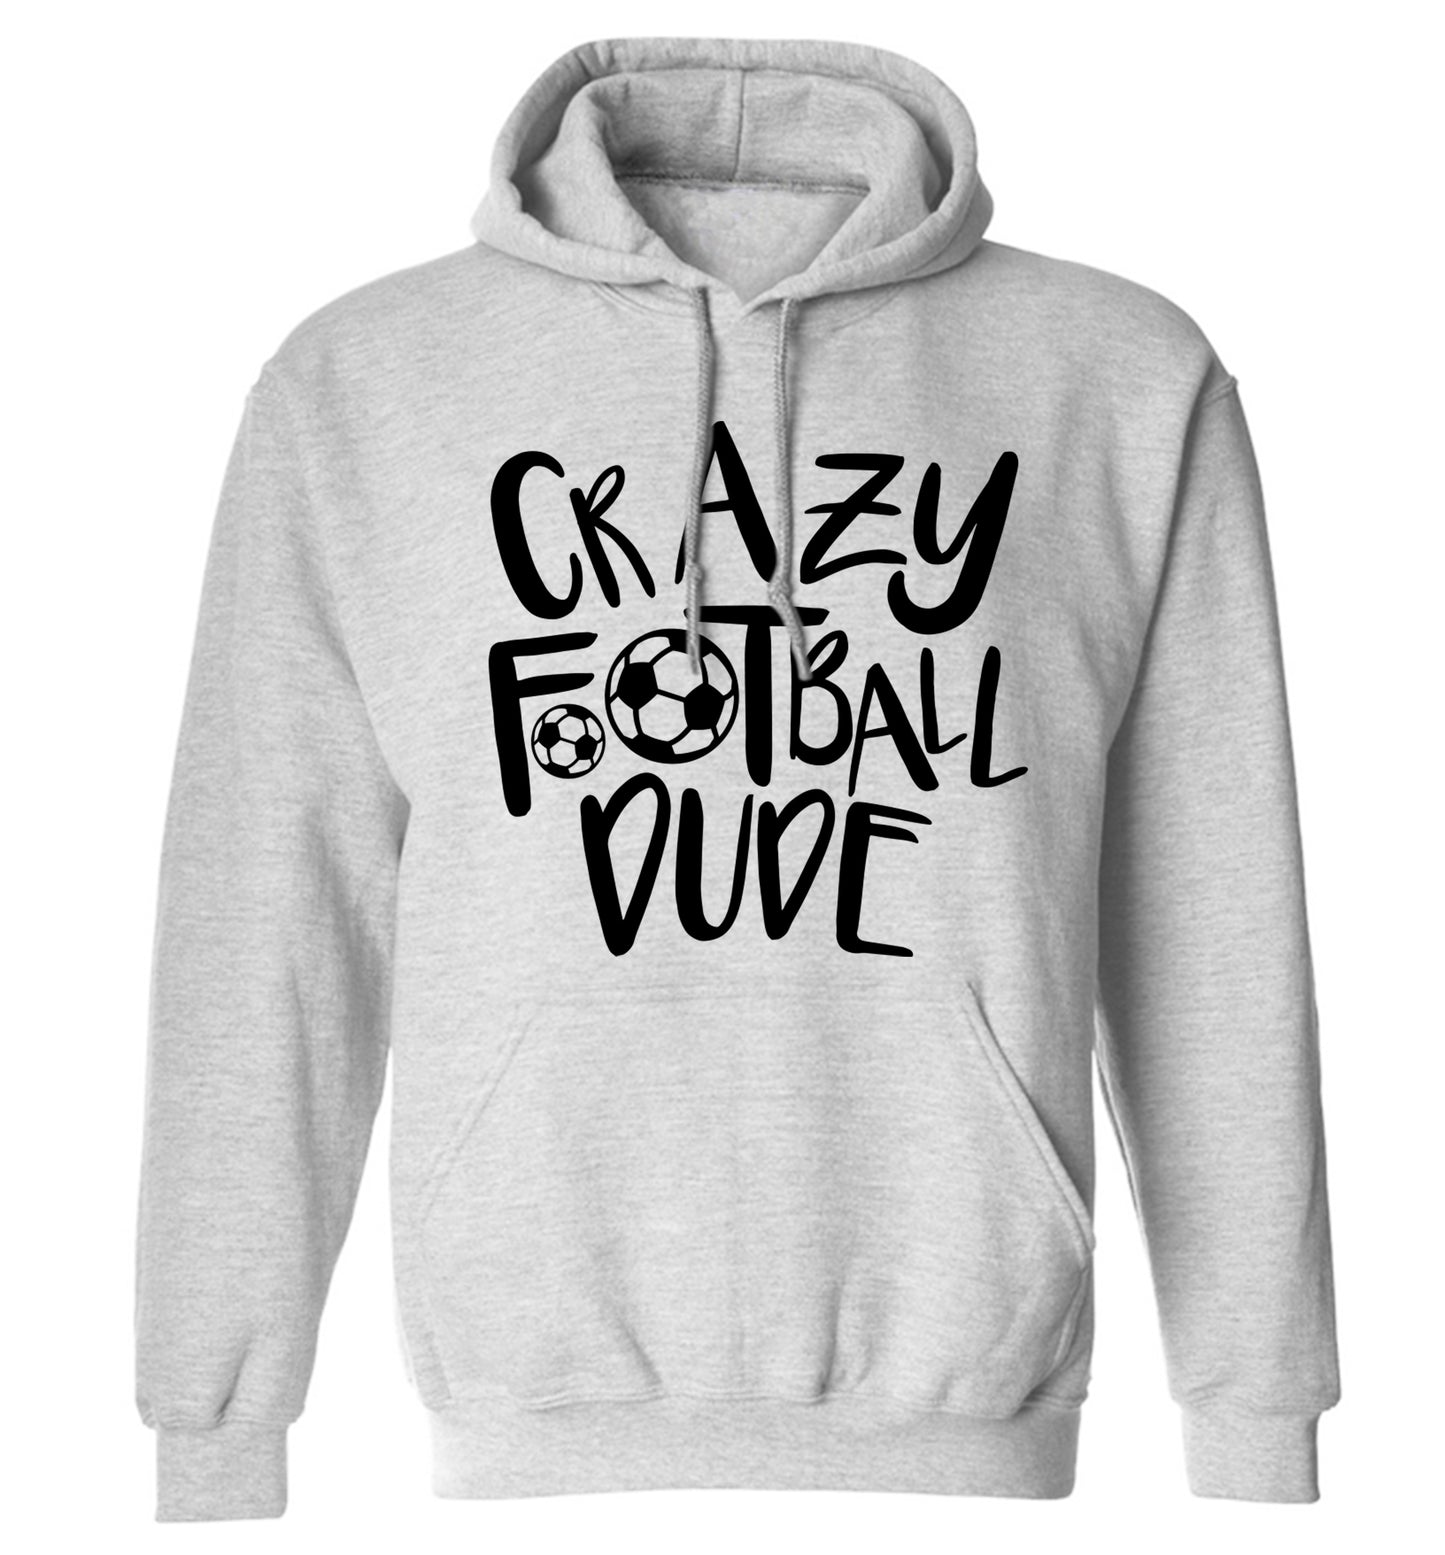 Crazy football dude adults unisexgrey hoodie 2XL